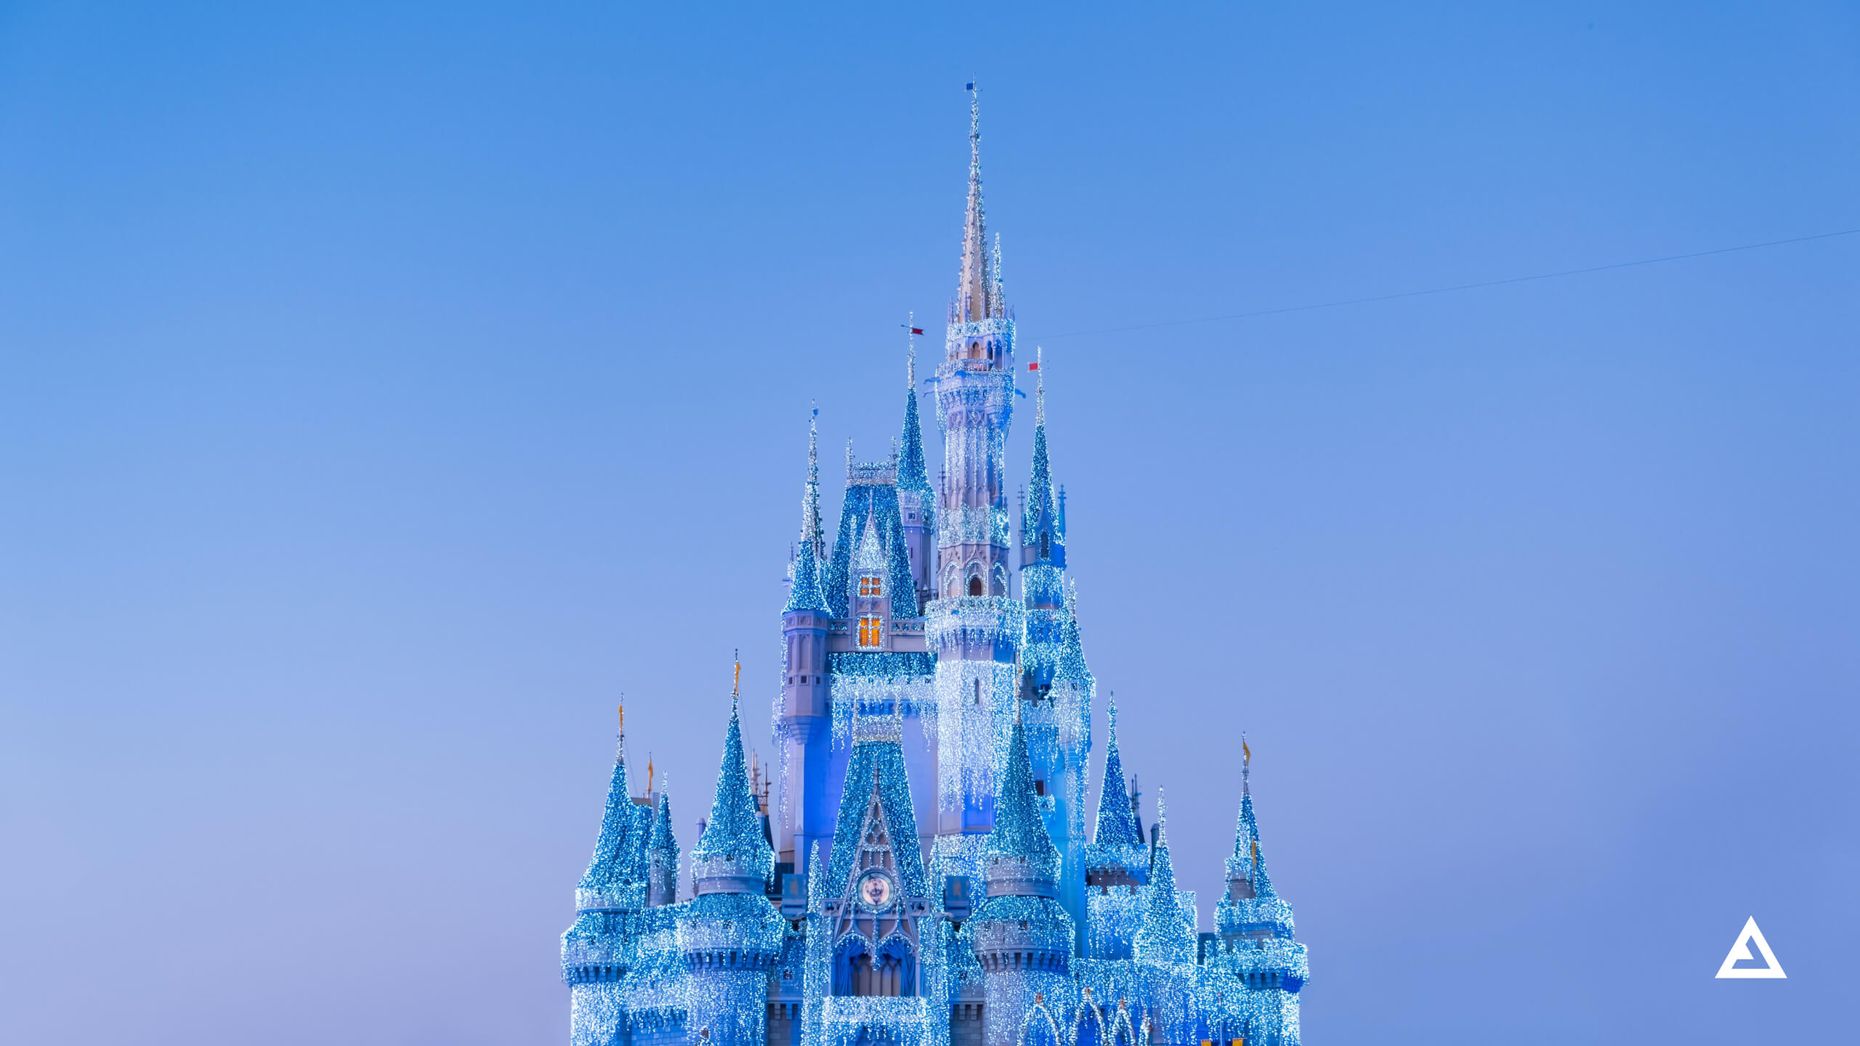 A Disney castle lit up in dazzling blue Christmas lights